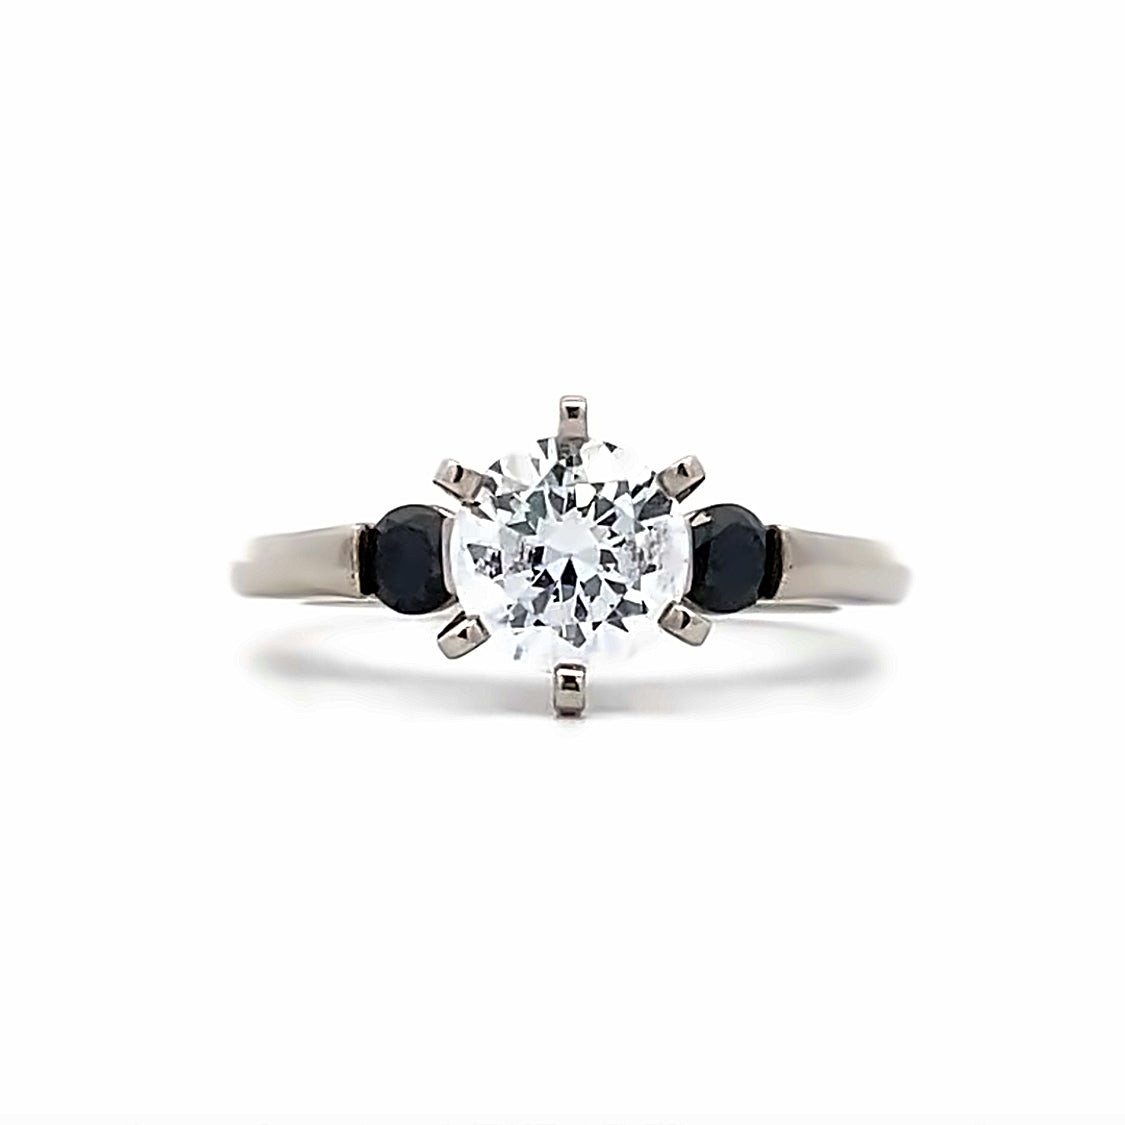 PALLADIUM 3 Stone Round Shape with Black Diamond Engagement Ring 22901L